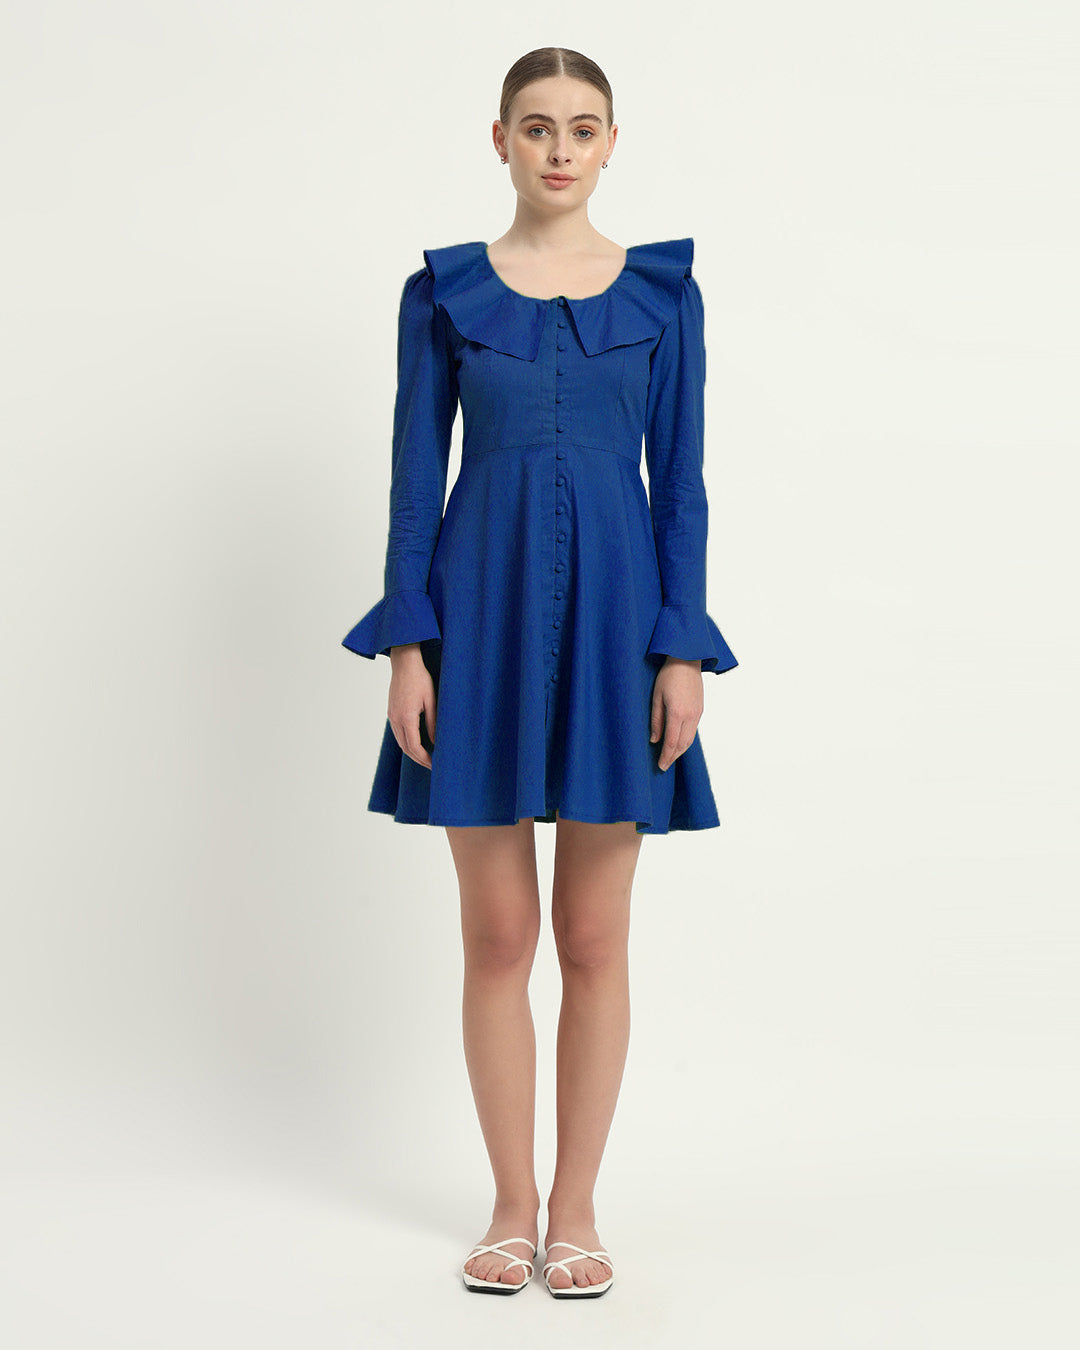 The Cobalt Fredonia Cotton Dress